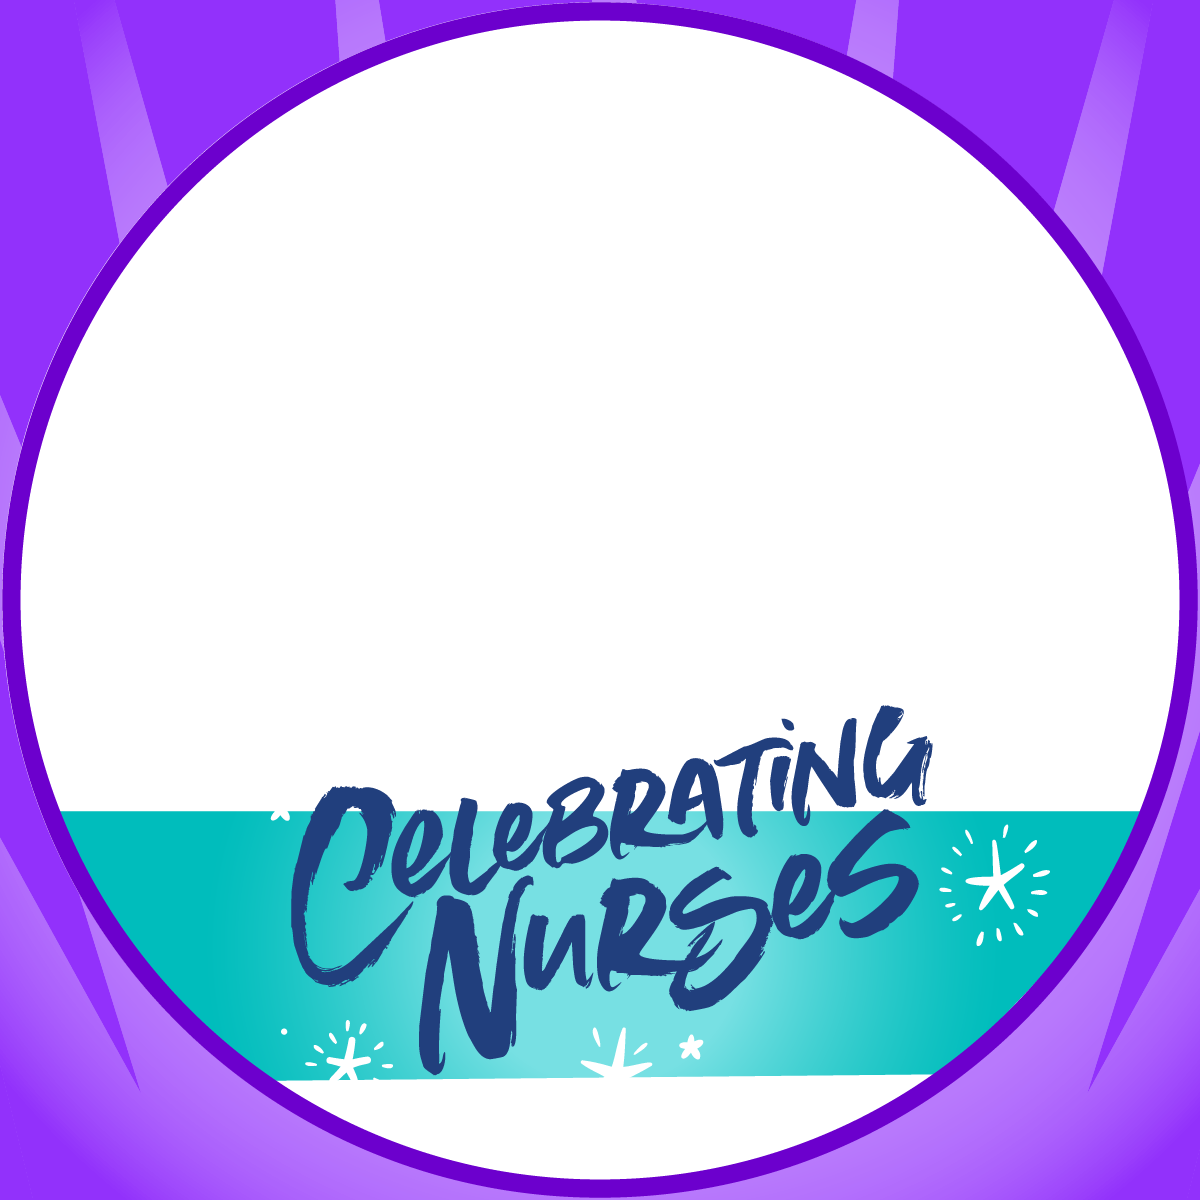 "Celebrating nurses" purple circle